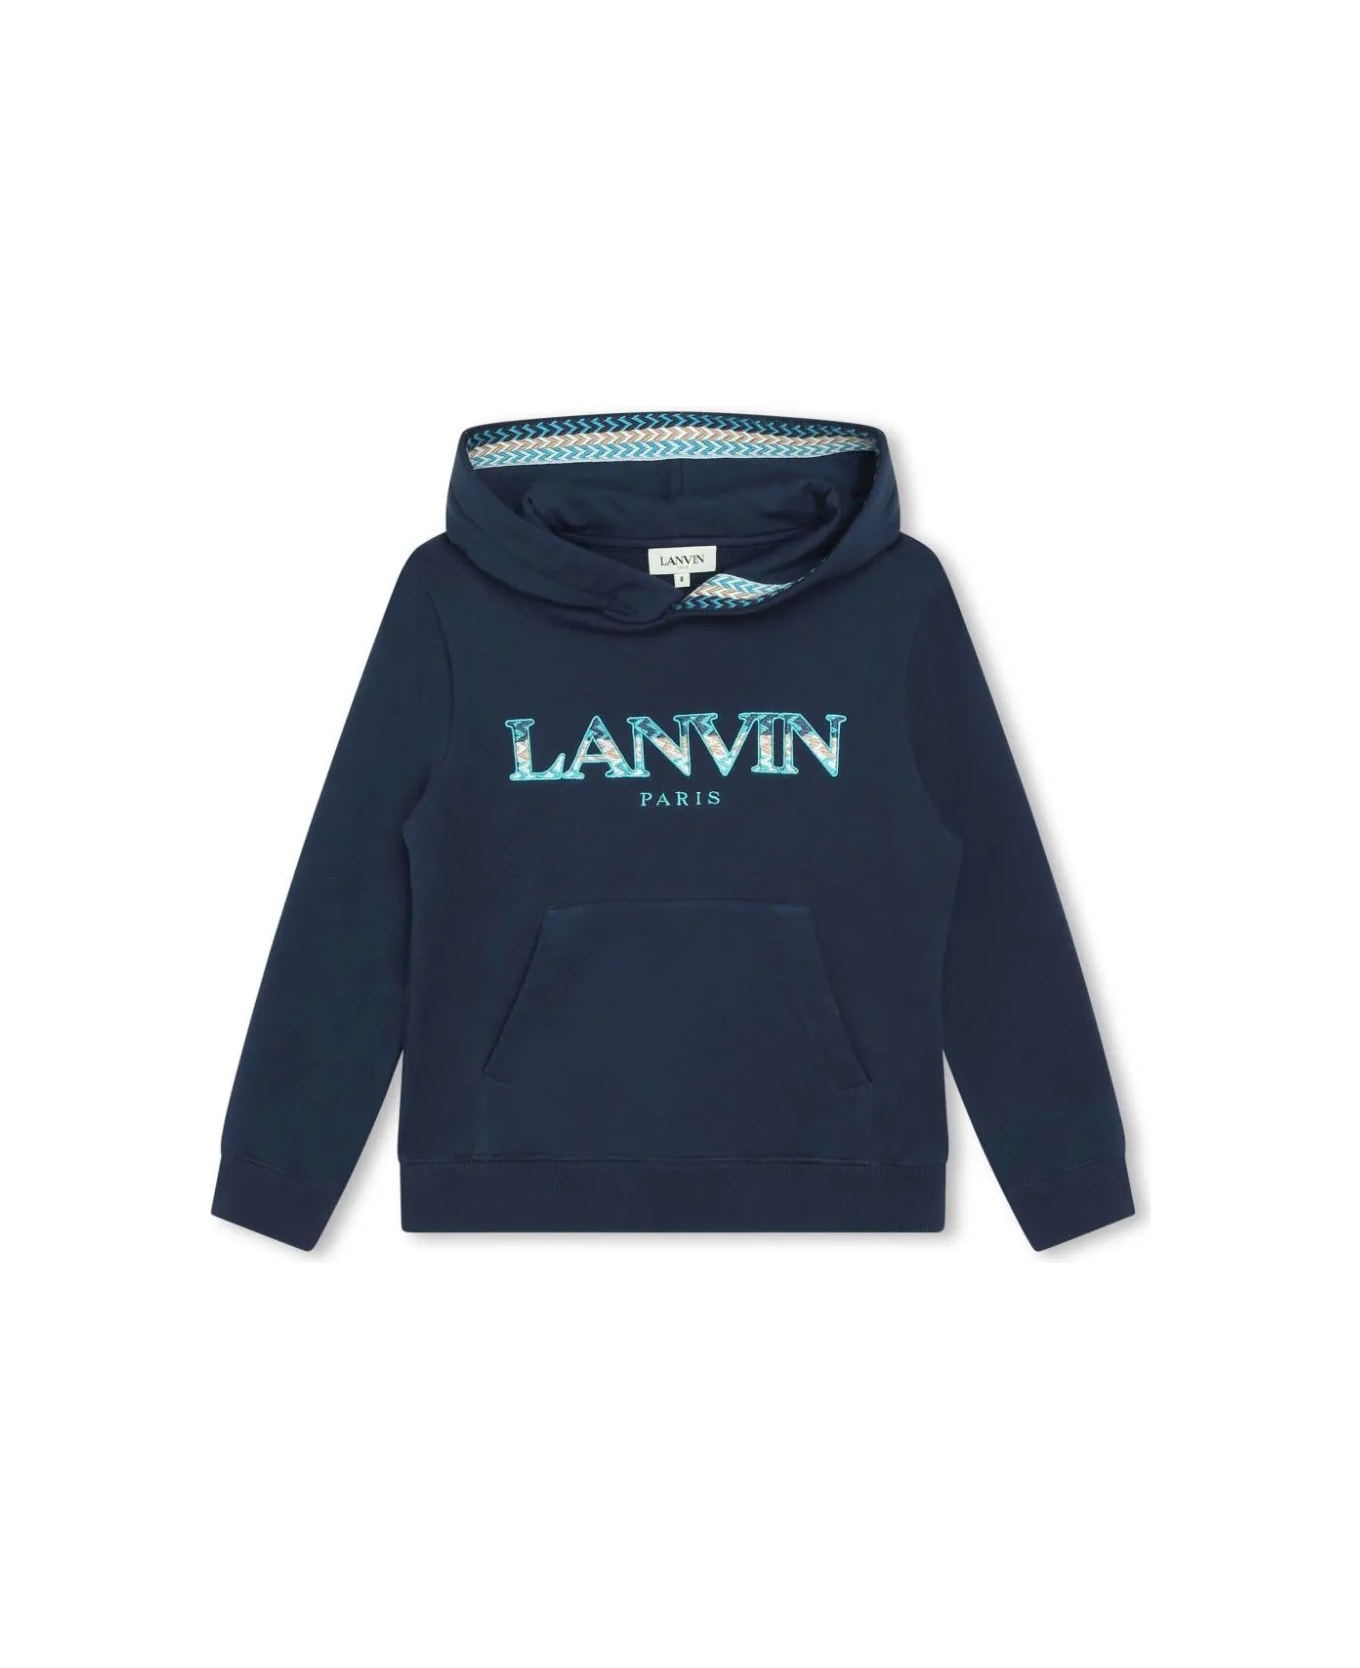 Lanvin Blue Hoodie With Lanvin "curb" Logo - Blue